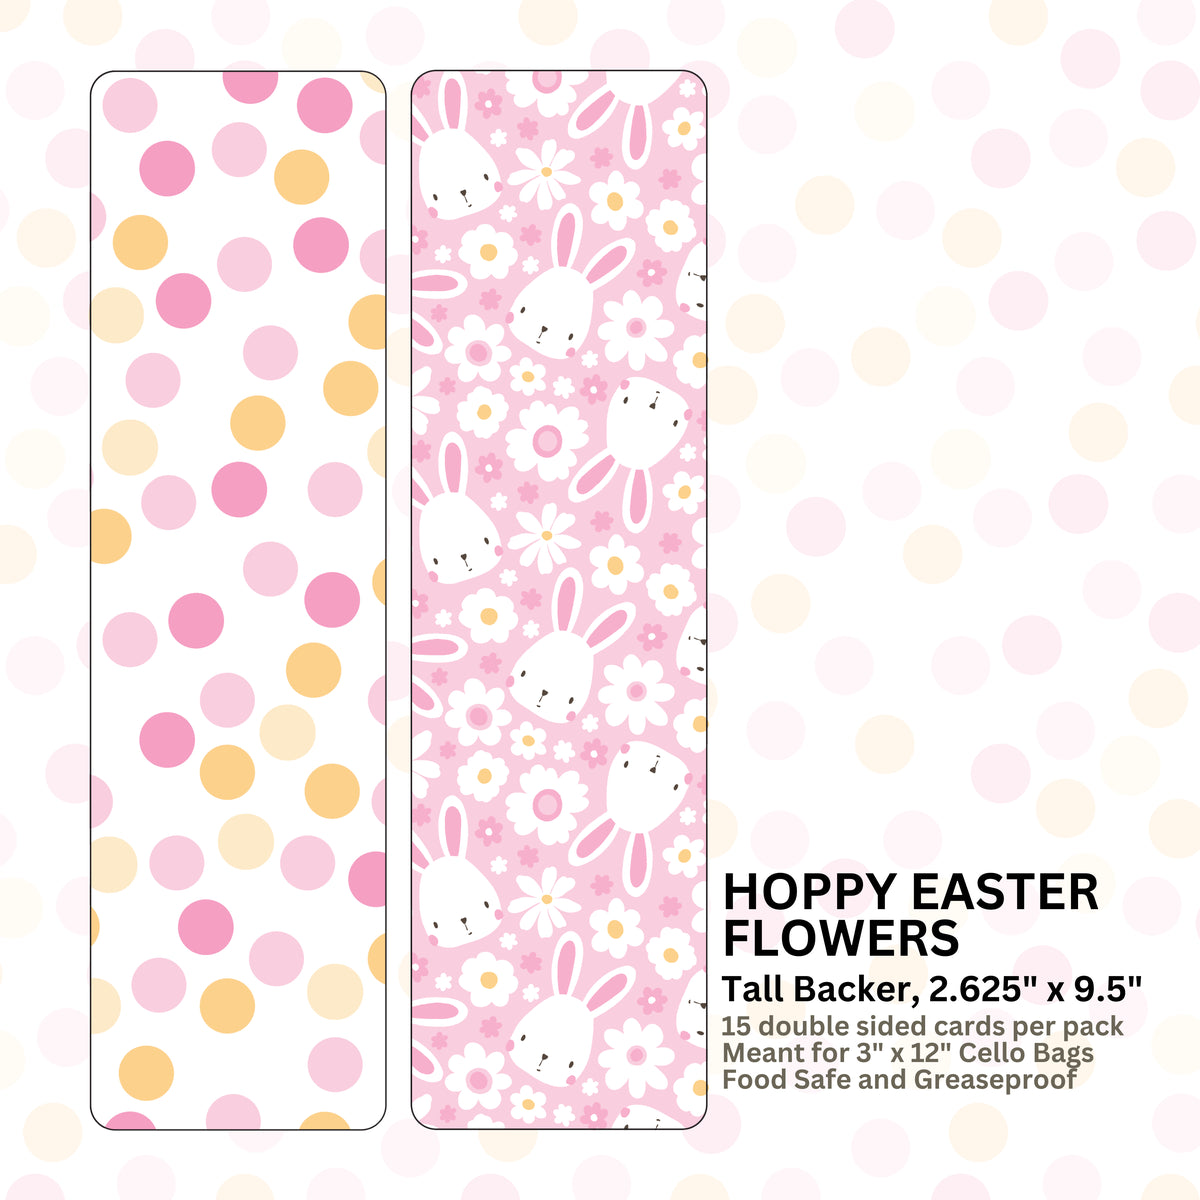 HOPPY EASTER FLOWERS - 2.625" x 9.5" TALL BACKERS